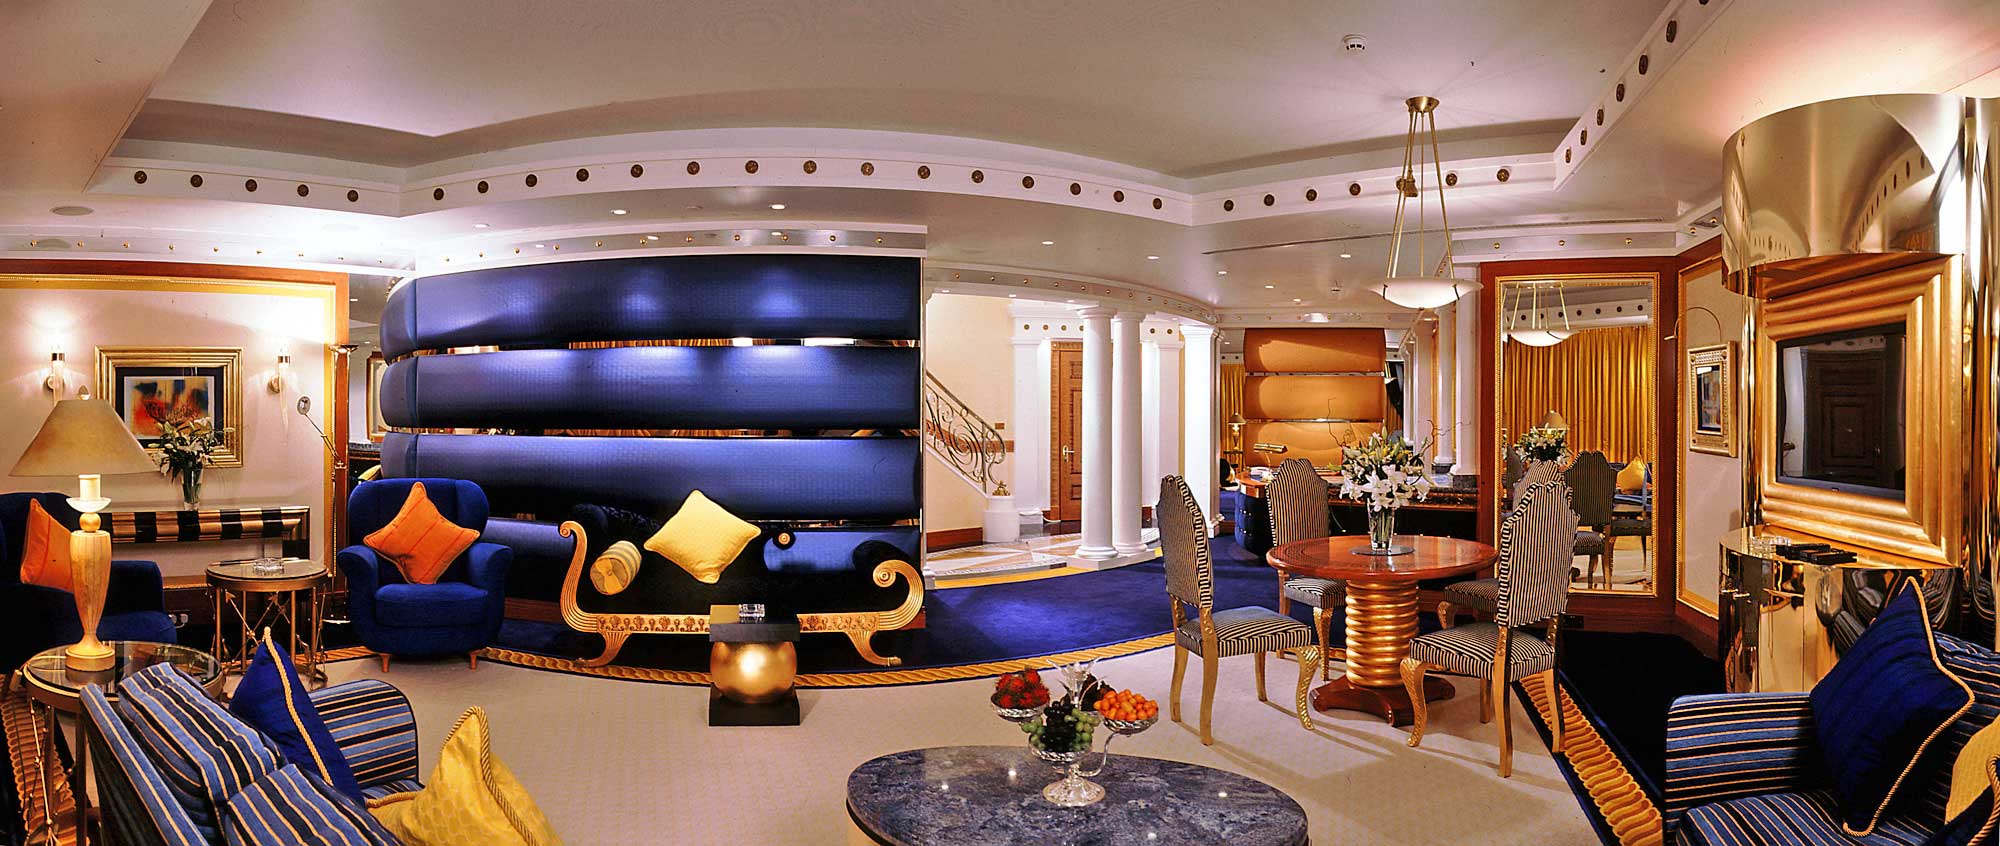 Most Luxurious Hotel In Dubai Alina Reyzelman